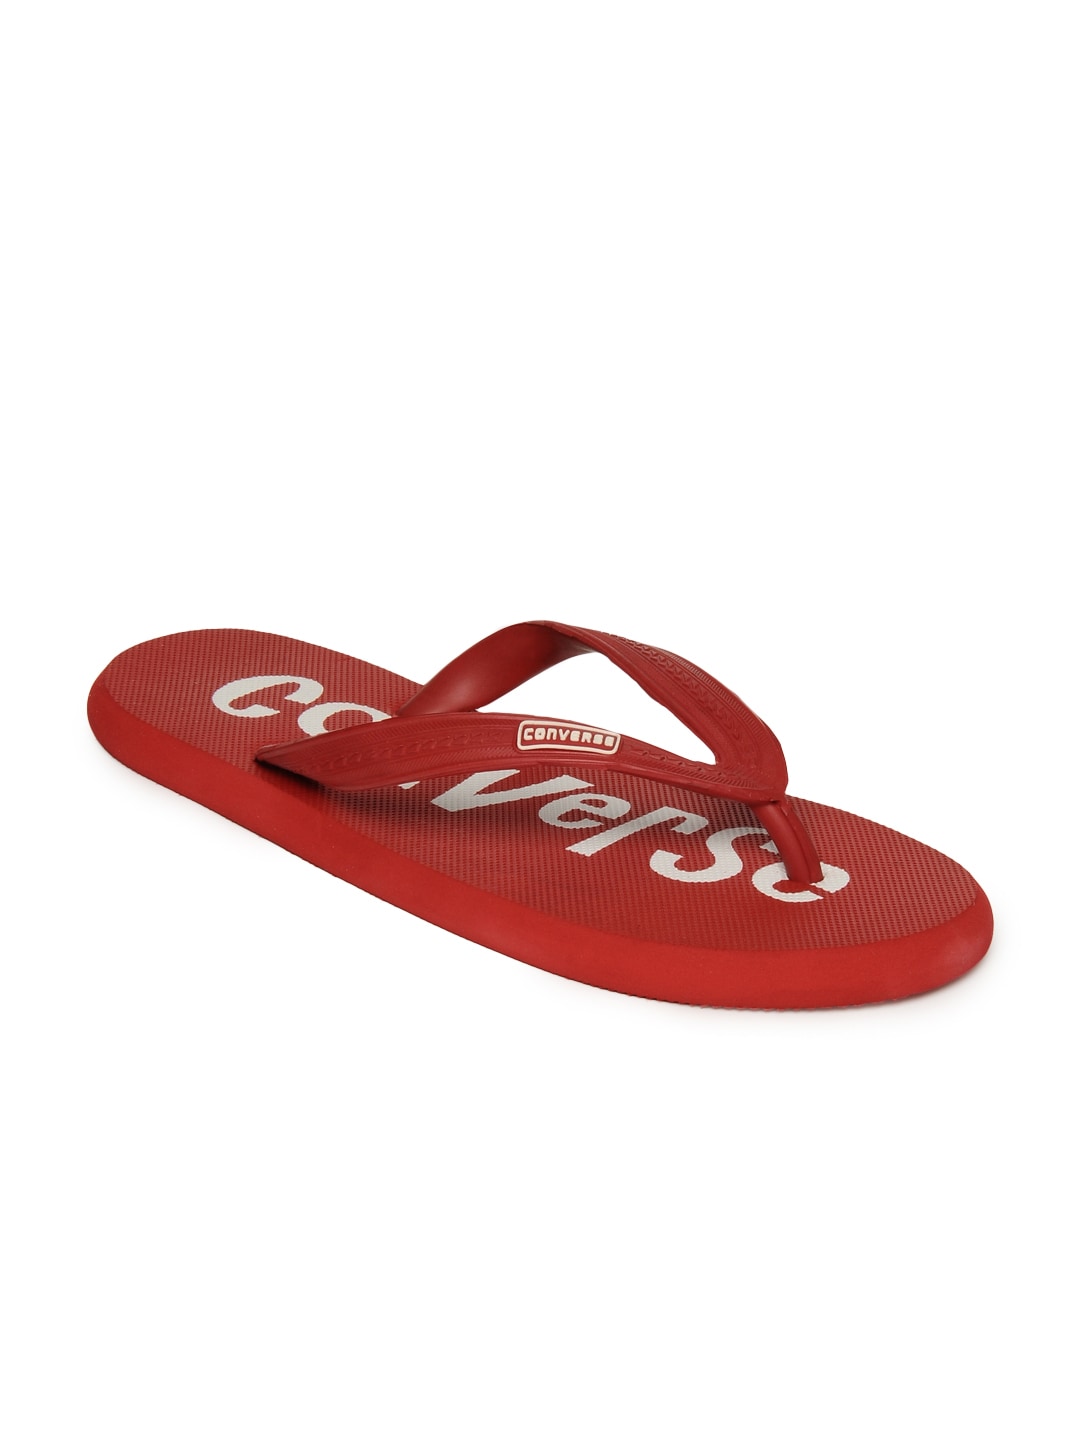 Converse Unisex Red Basic Flip Flops